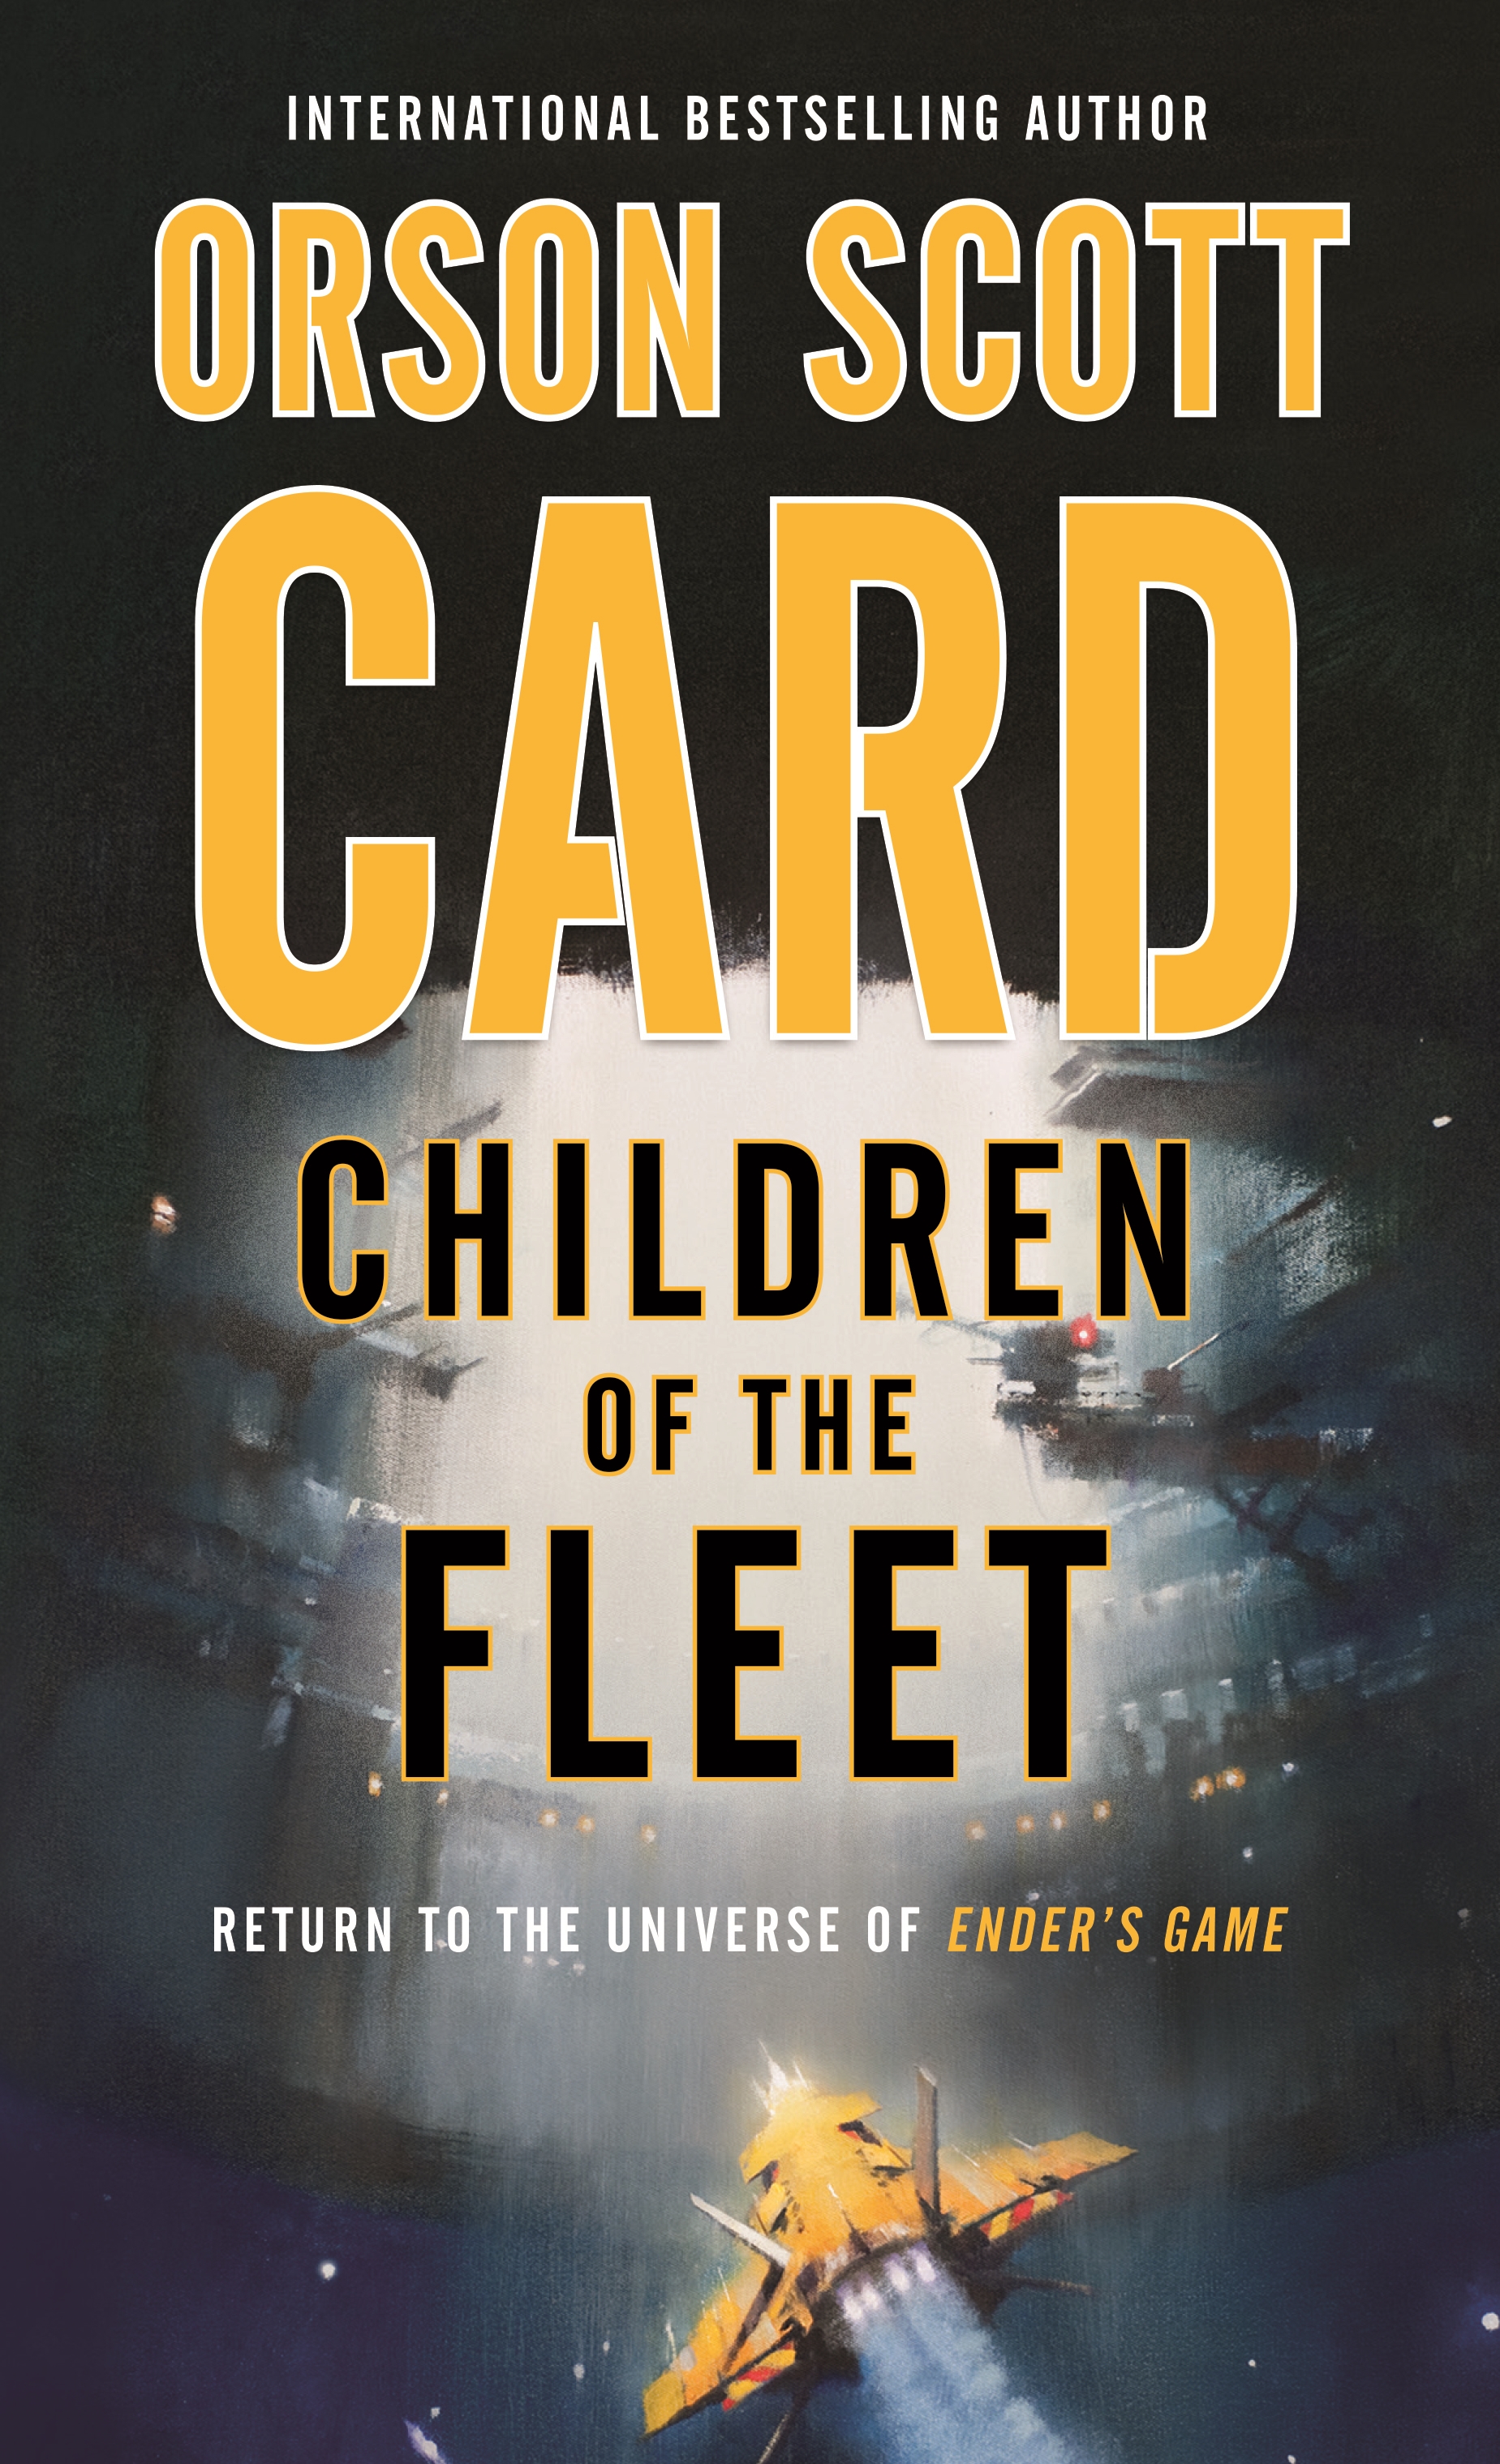 Children of the Fleet by Orson Scott Card